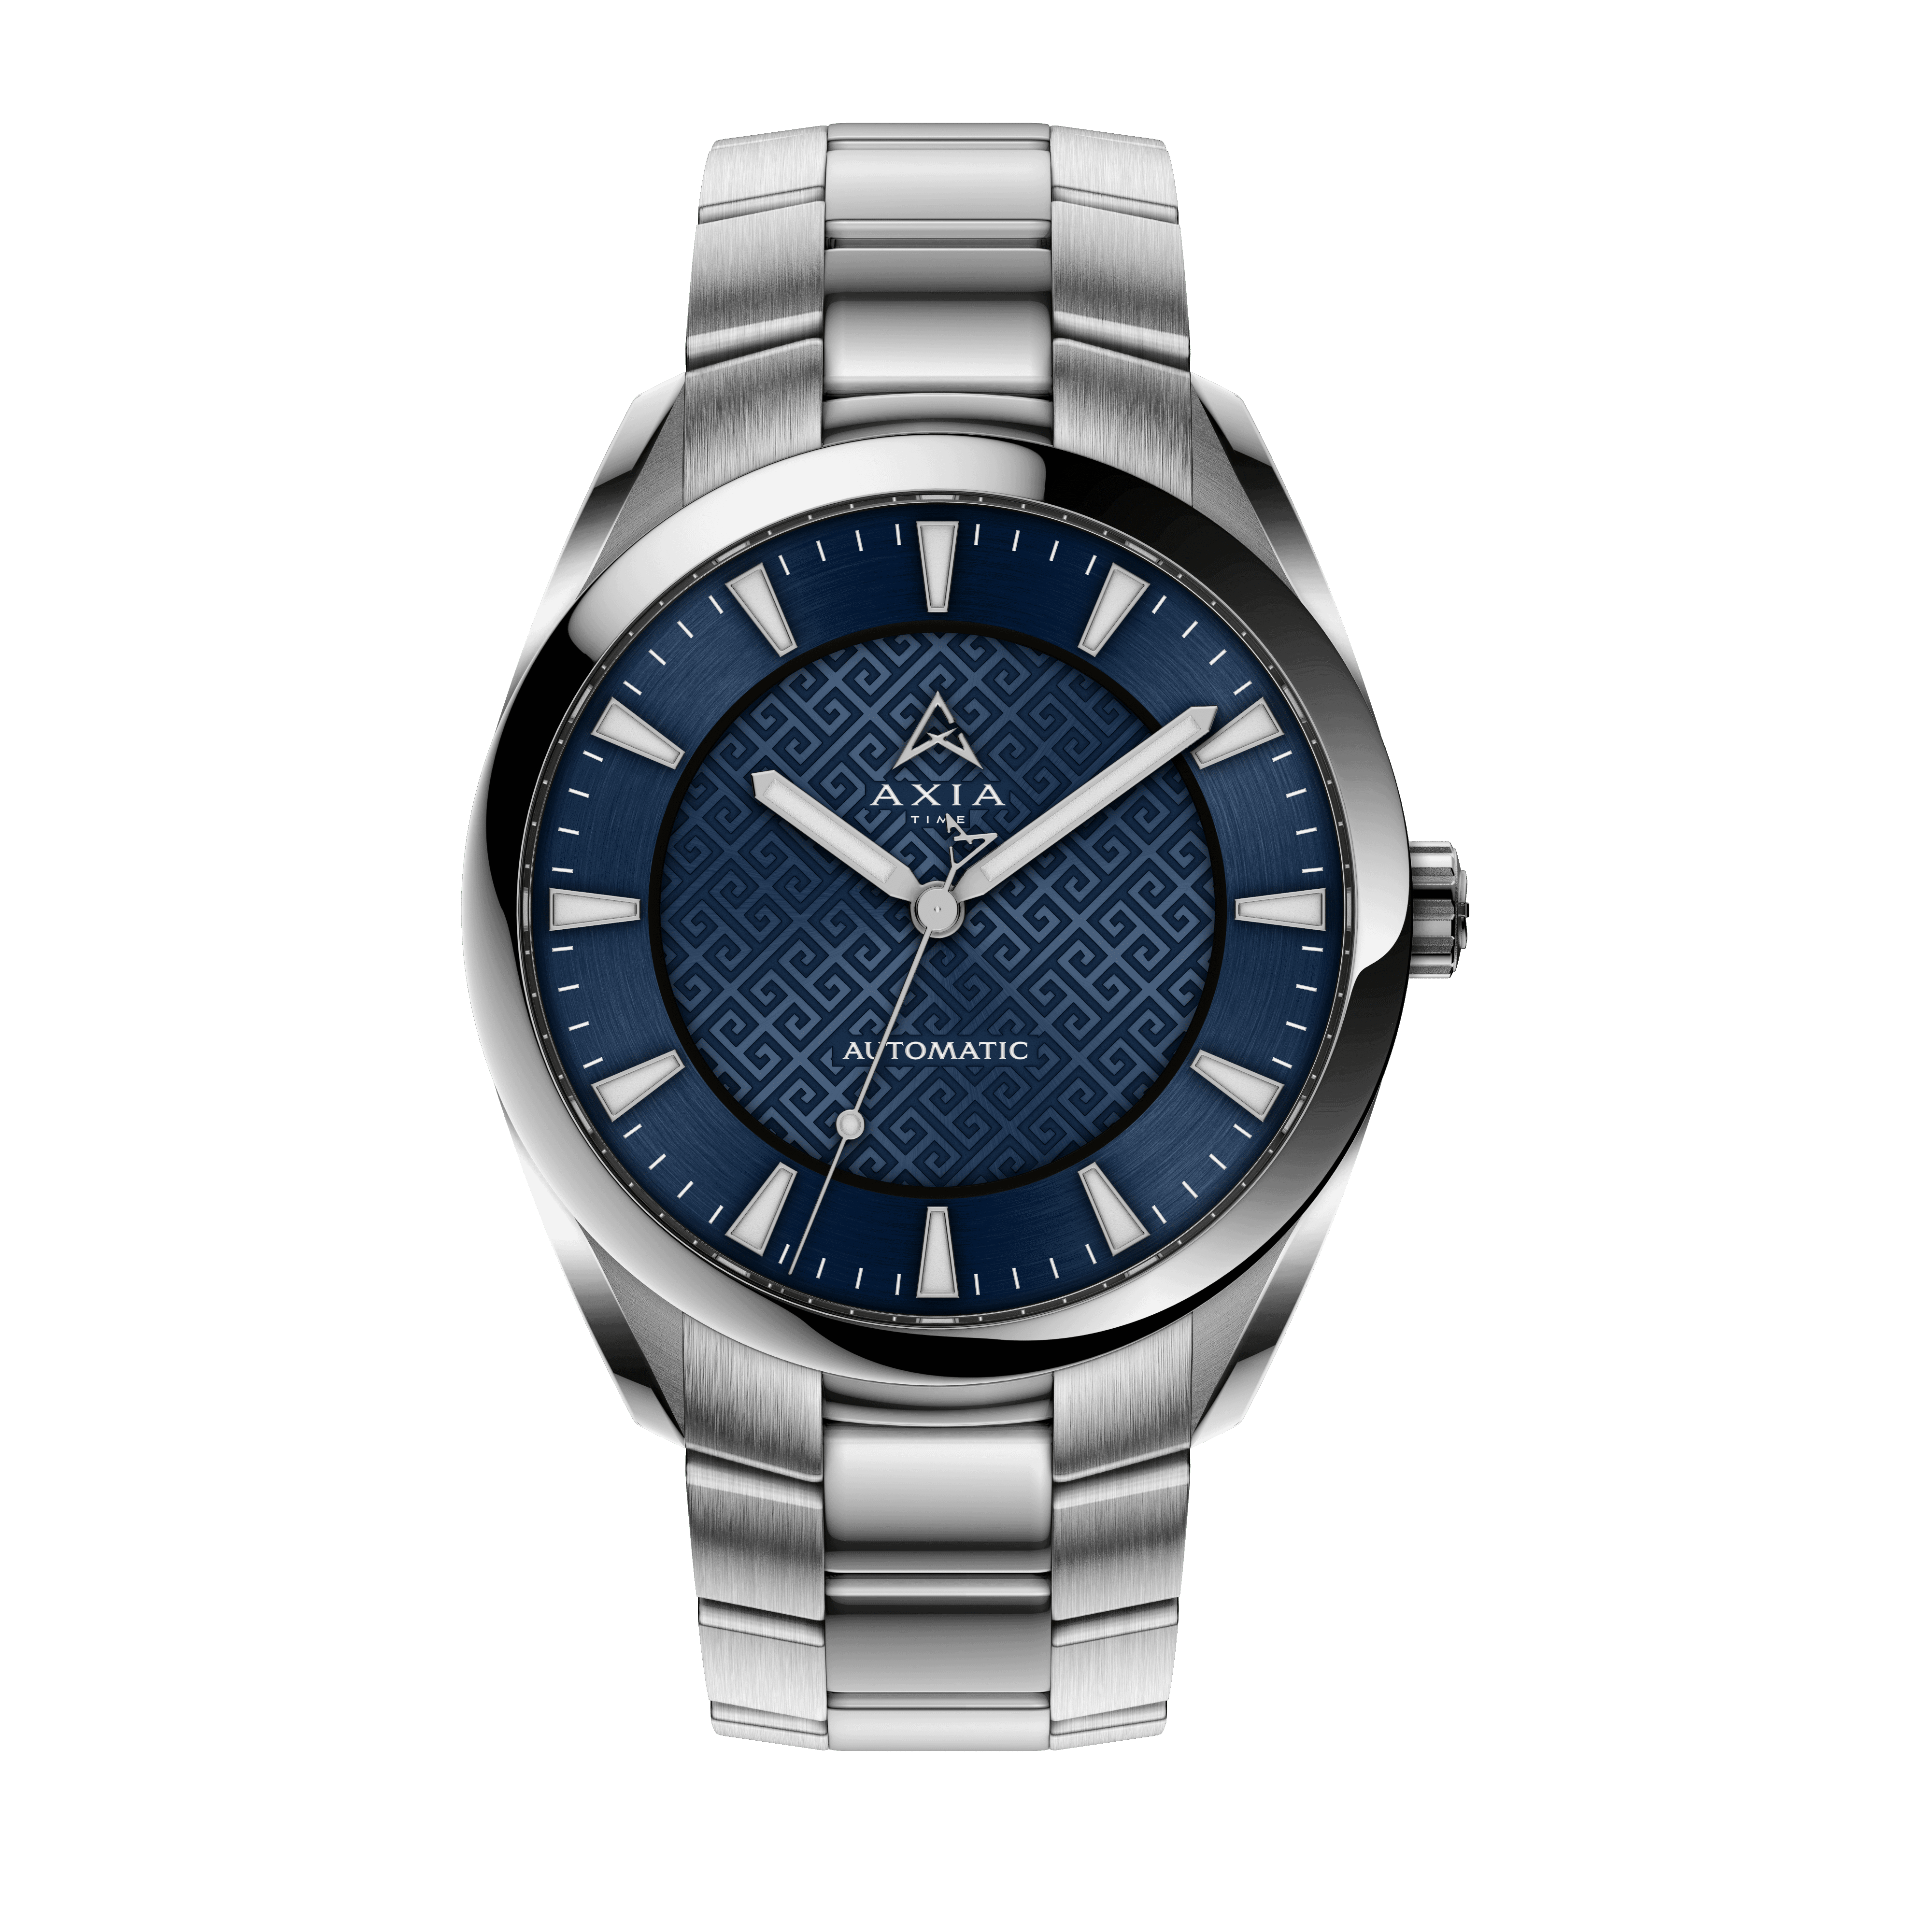 AXIA Time Kairos II Skoura edition swiss made automatic watch